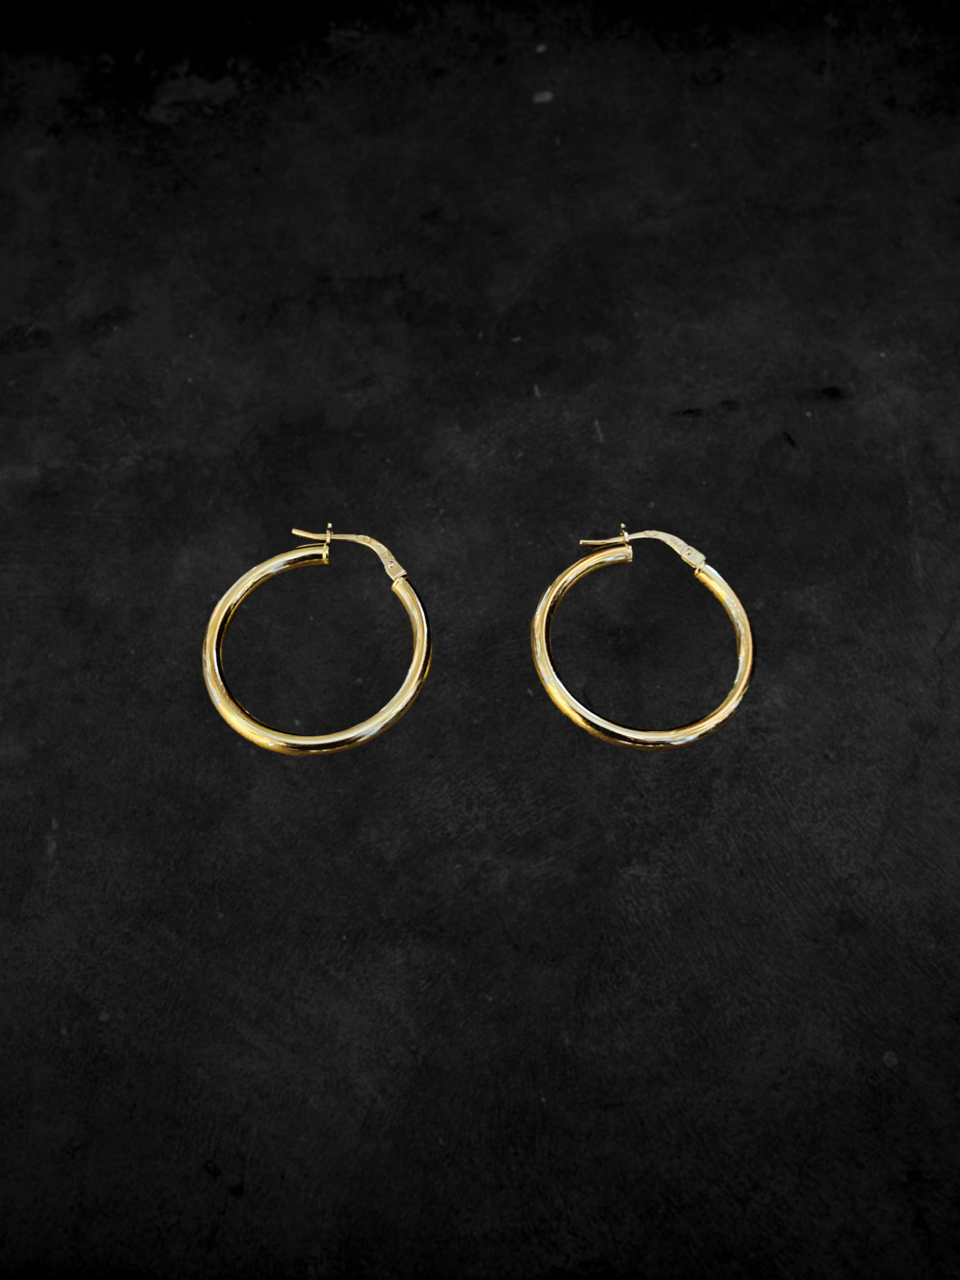 Gold 18k Hoops Earrings - Davis Concept Store